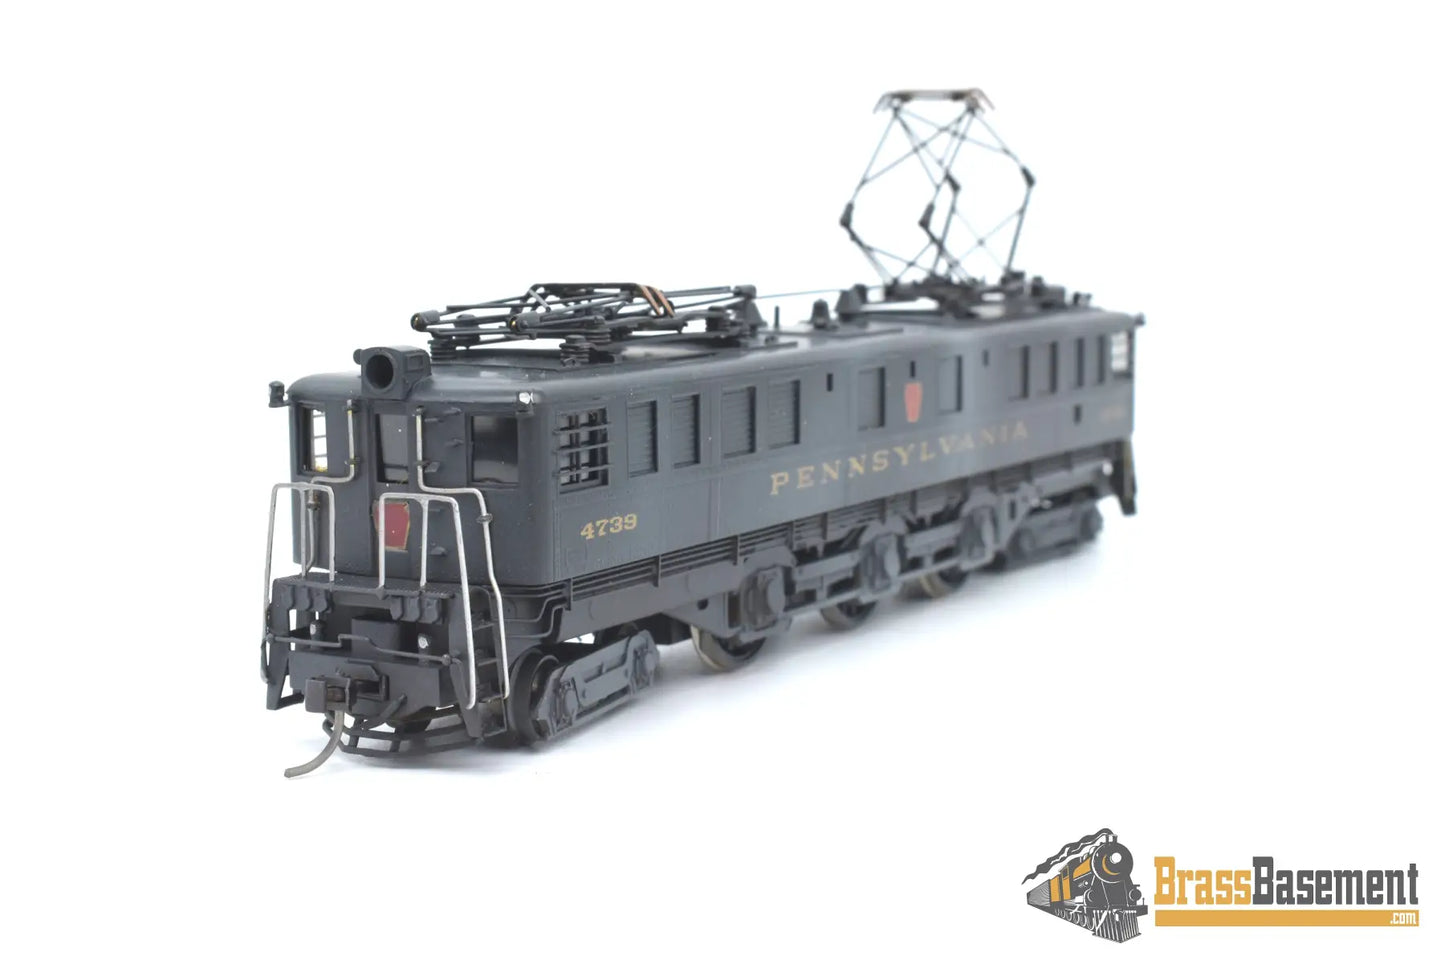 Ho Brass - Alco Prr Pennsylvania Railroad P5A Electric Custom Paint